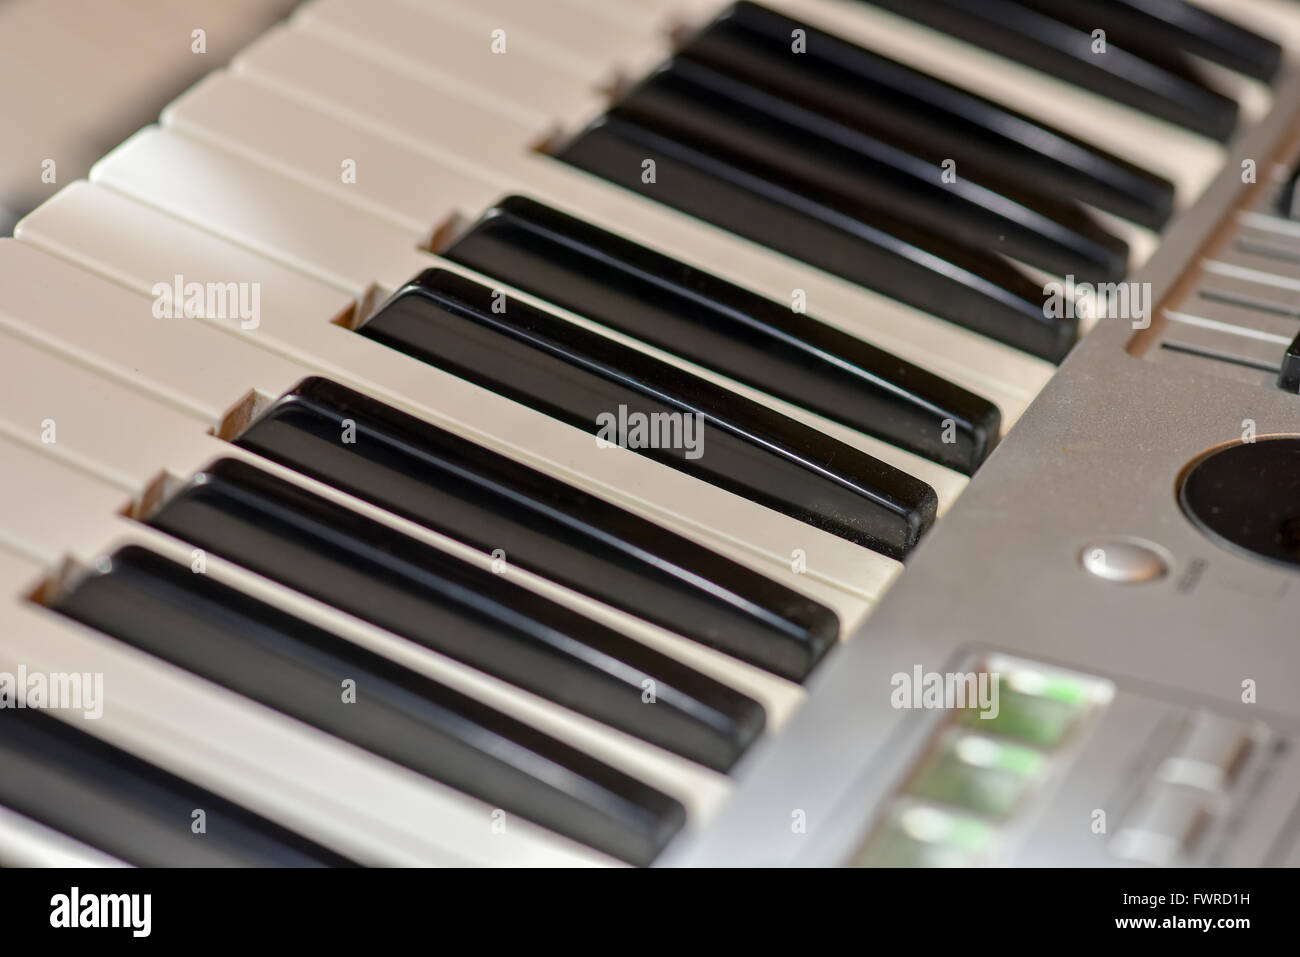 Electronic organ keyboards in natural light Stock Photo